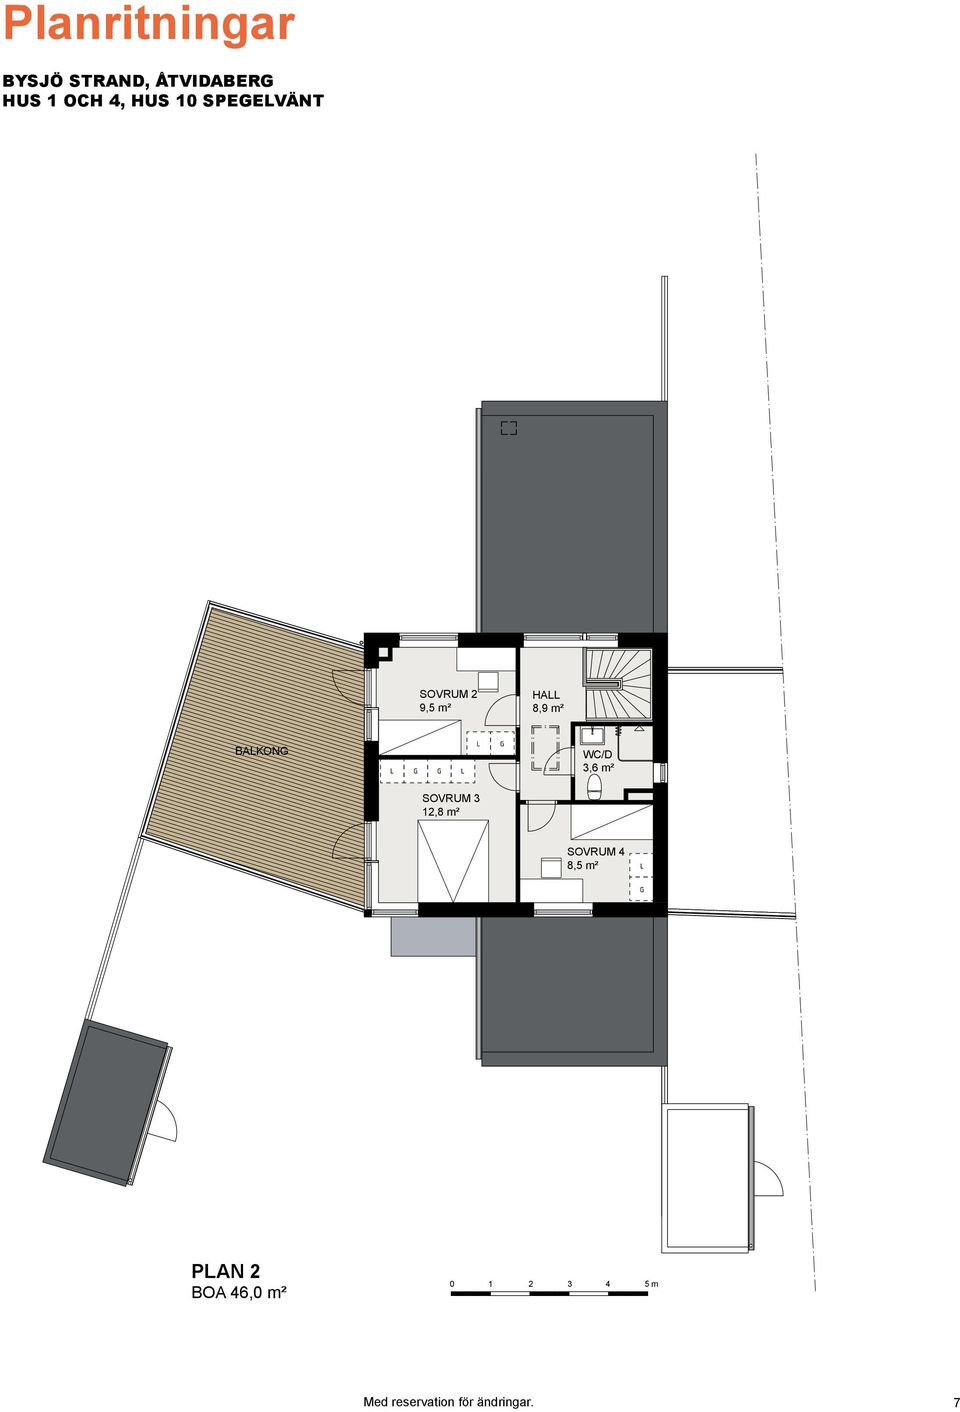 SOVRUM 3 12,8 m² SOVRUM 4 8,5 m² PLAN 2 BOA 46,0 m² 0 1 2 3 4